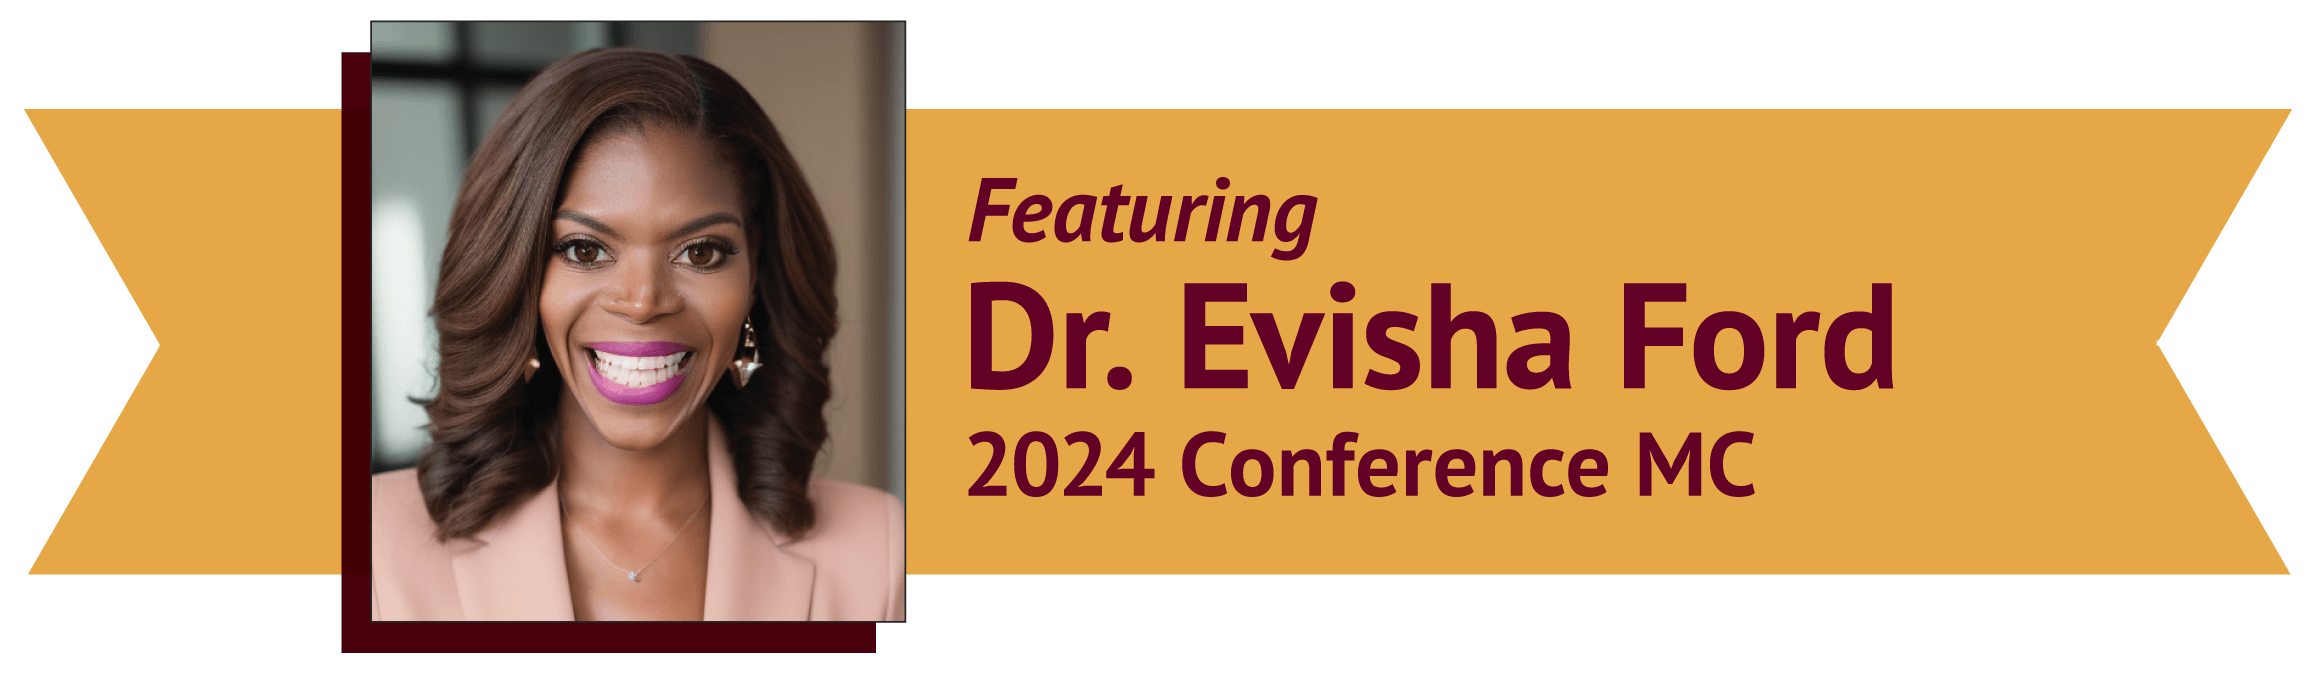 Dr. Evisha Ford, MC for CSWC 2024